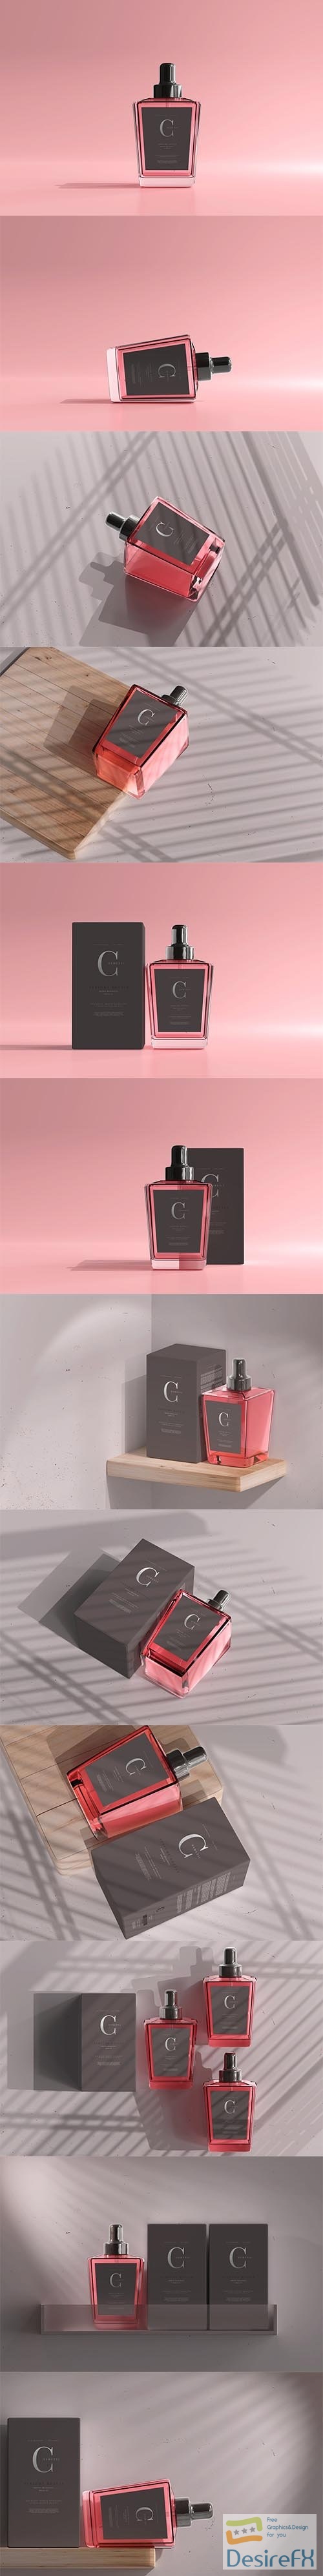 CreativeMarket - Perfume Bottle with Box Mockup 6056065